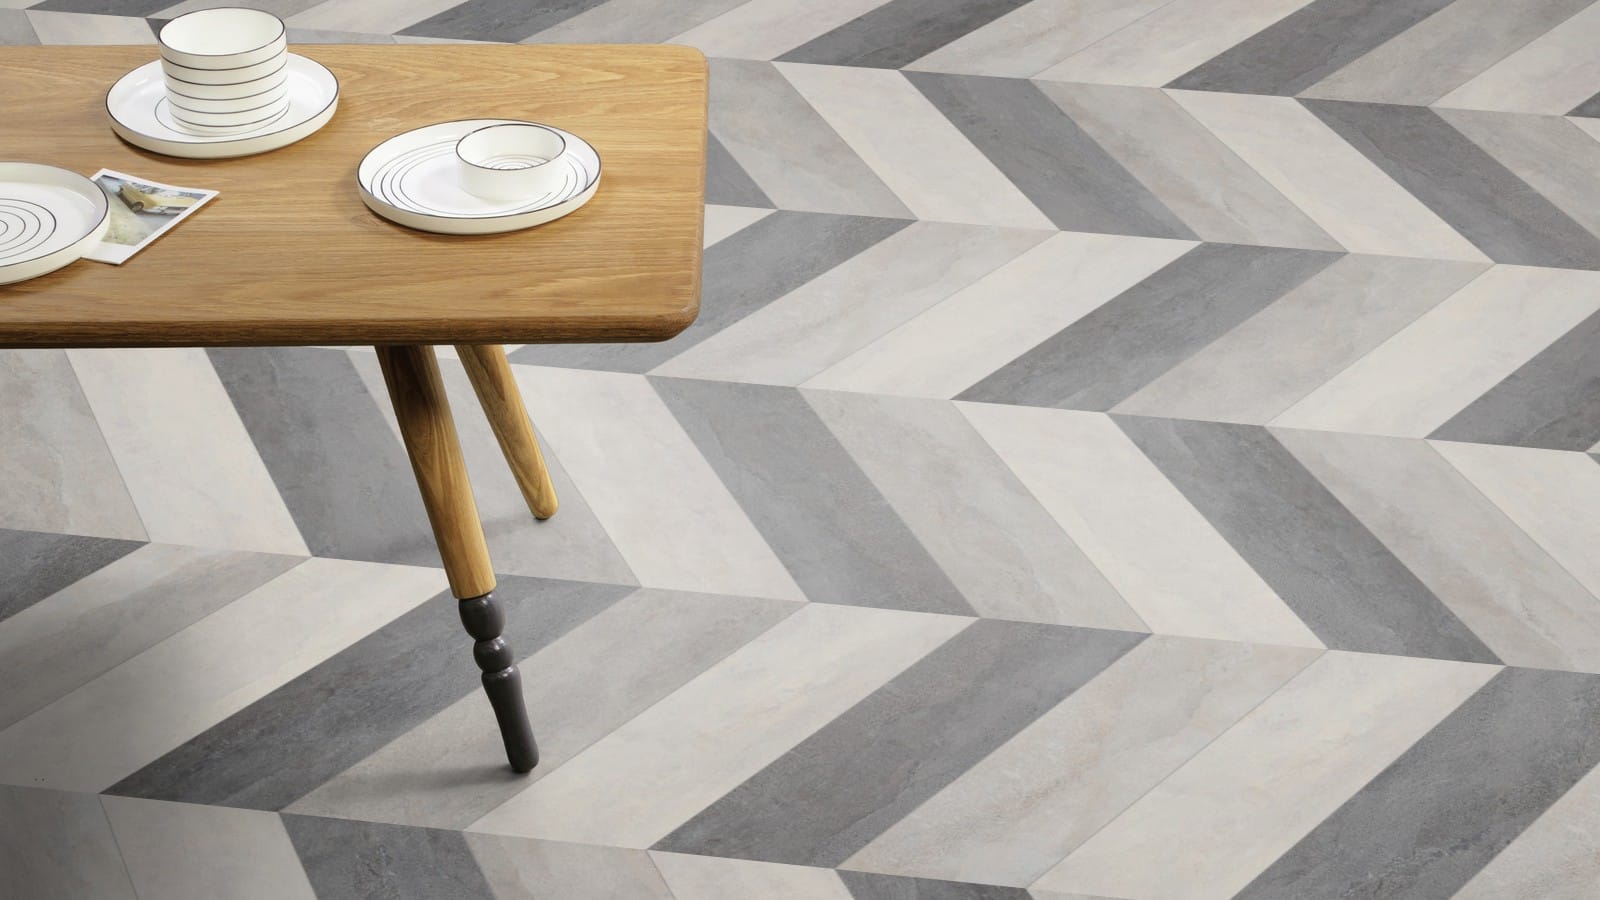 The Pleat 3 design of Tempus Embrace luxury vinyl tile by Amtico